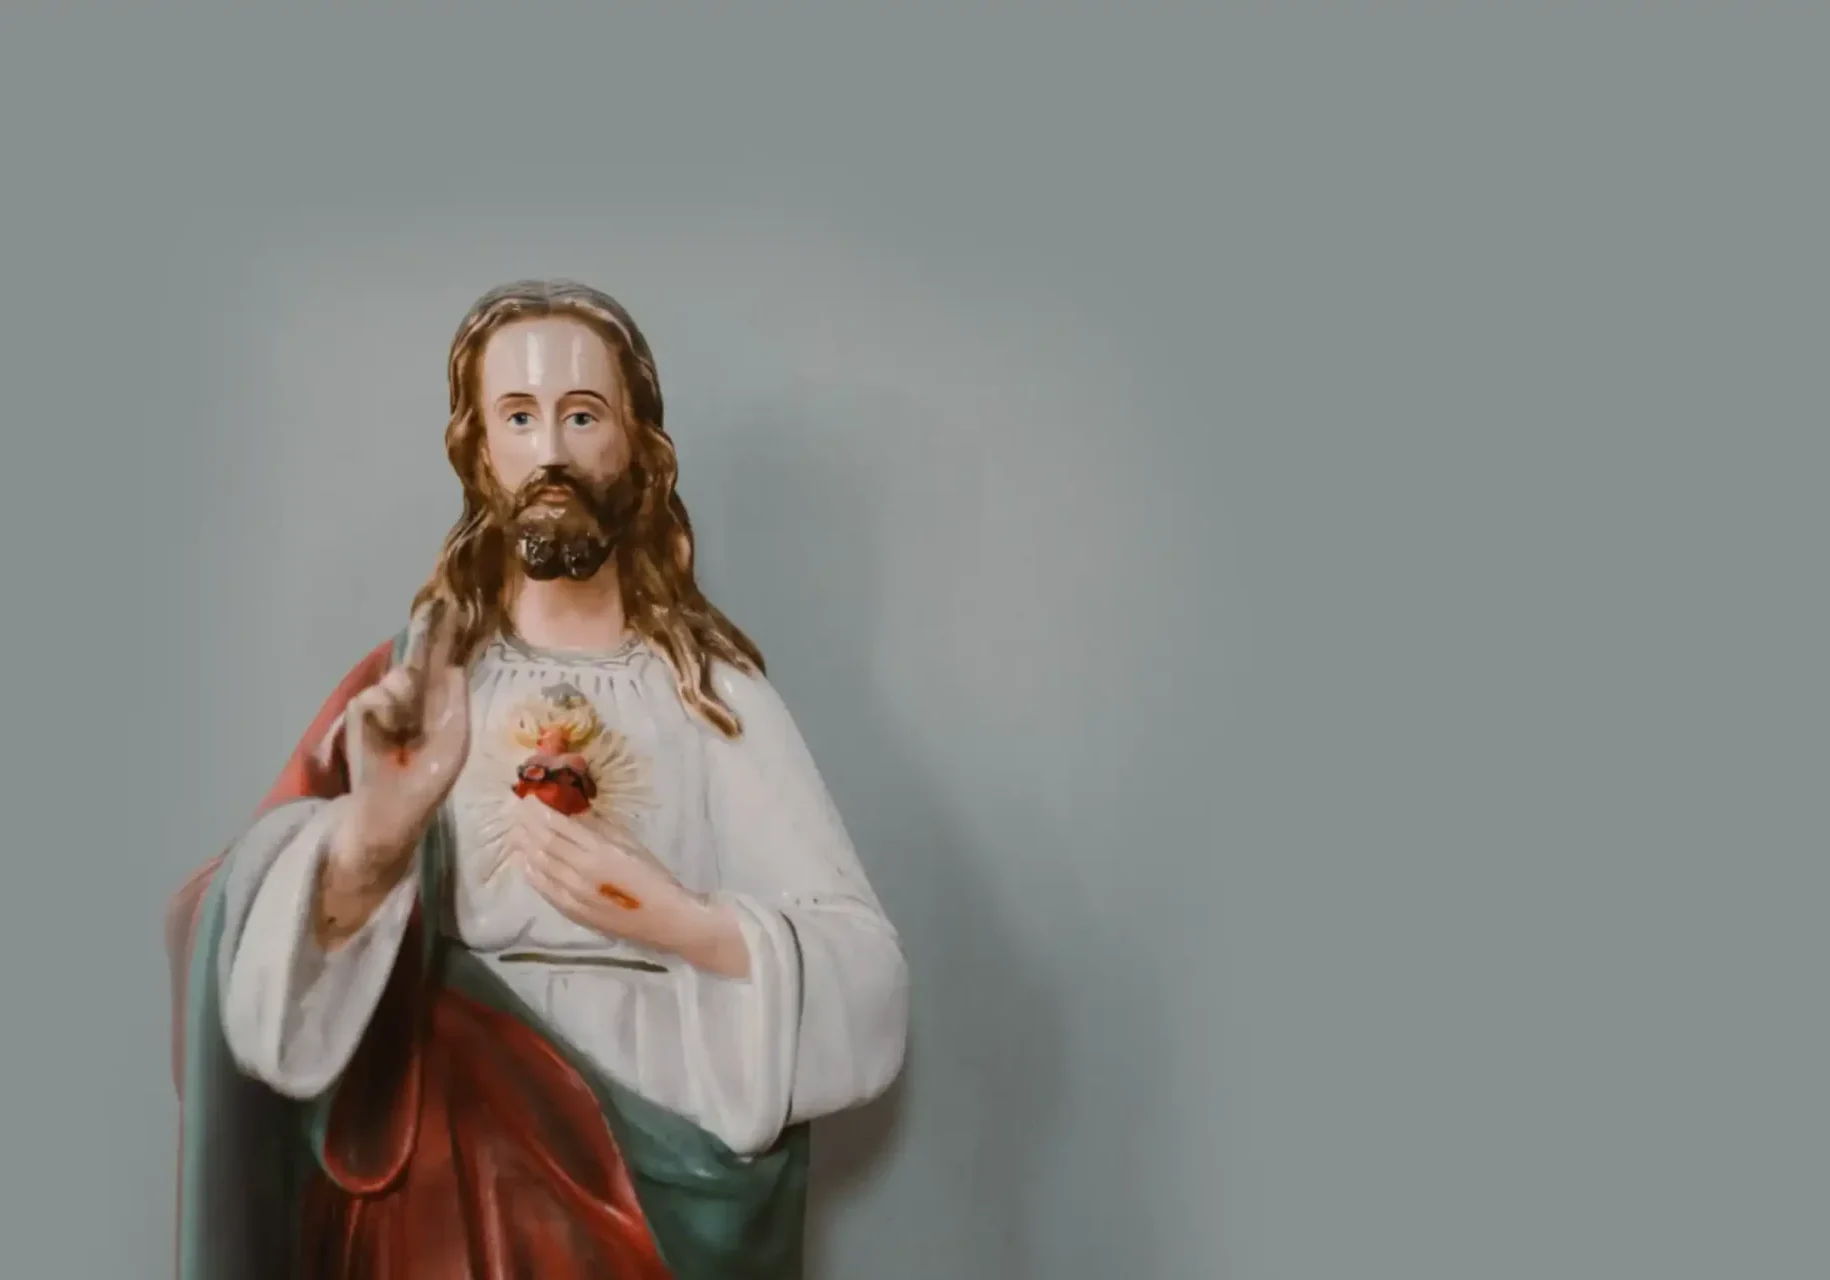 Closeup of the Jesus Christ figurine